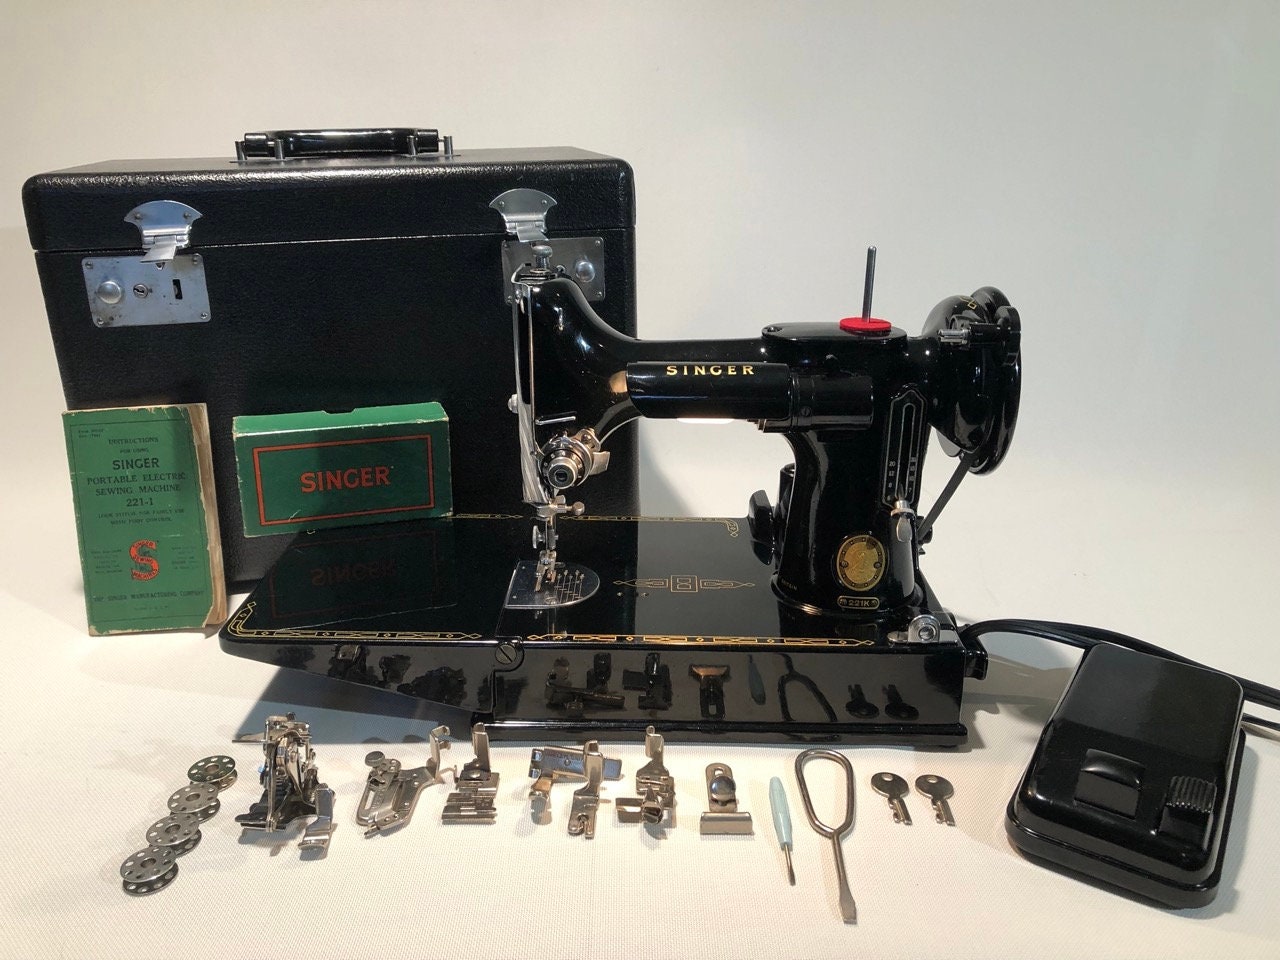 Vintage Singer Simanco Sewing Machine Accessories choose the ones